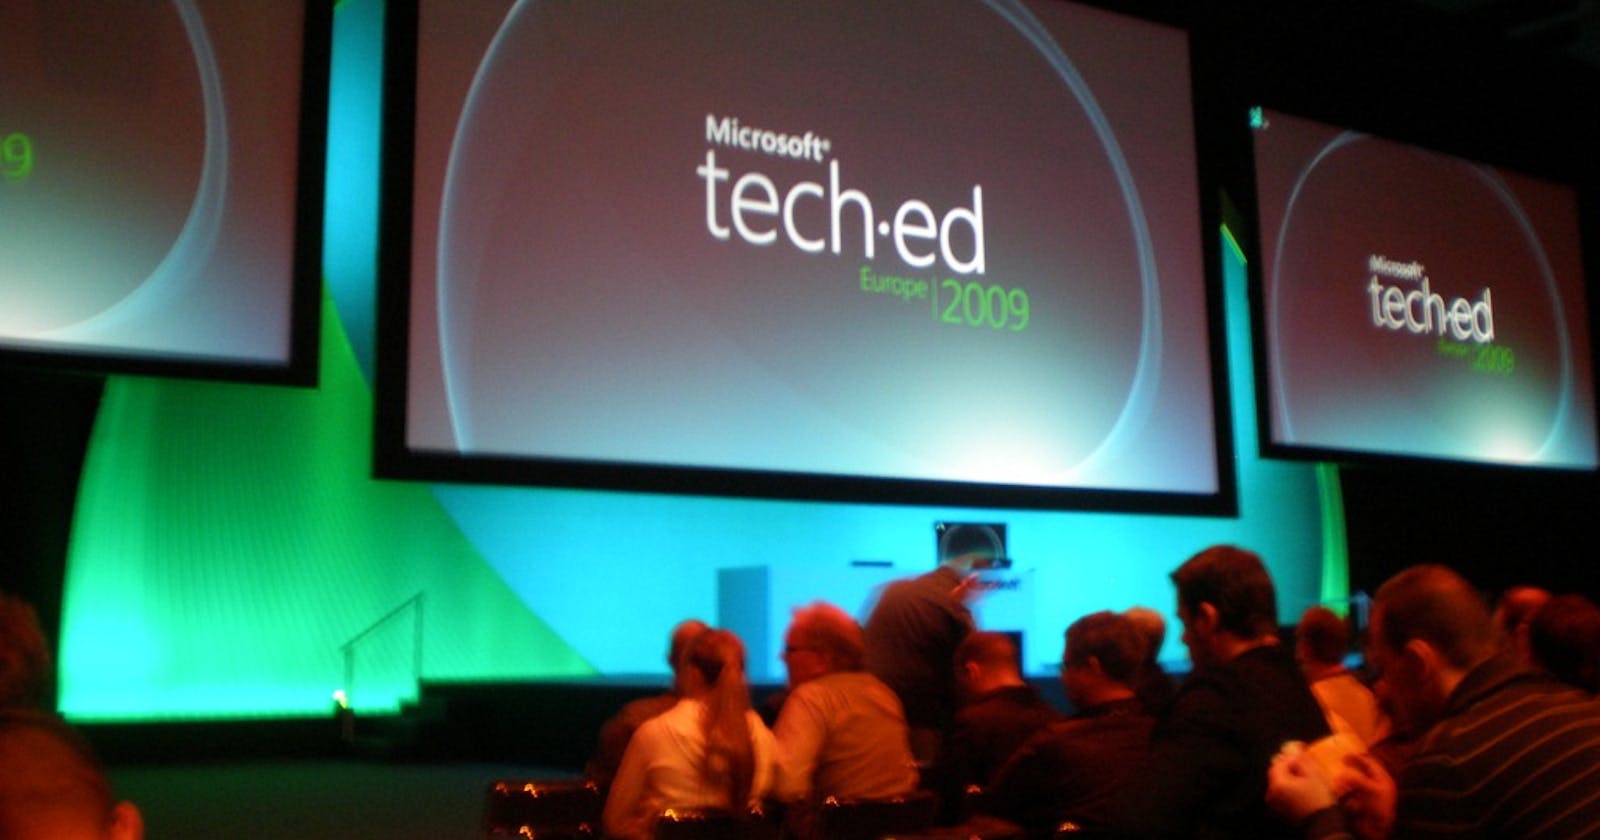 TechEd Europe 2009 – Berlin